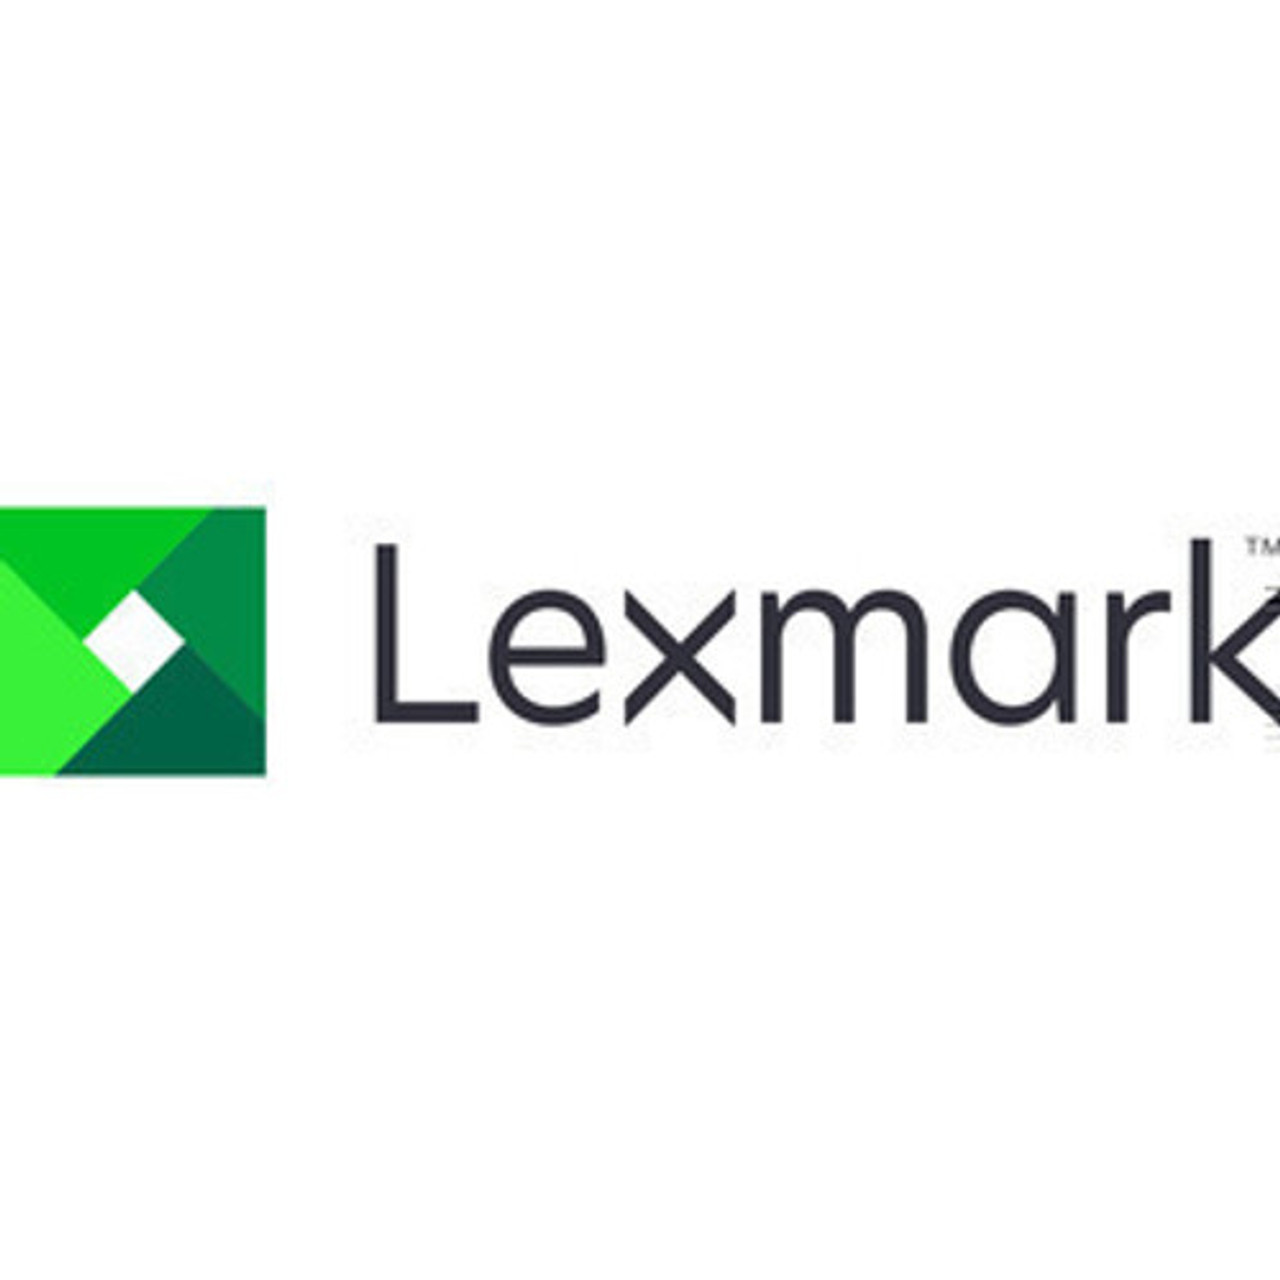 Lexmark 1 Year Advanced Exchange - B3442 - 2371928